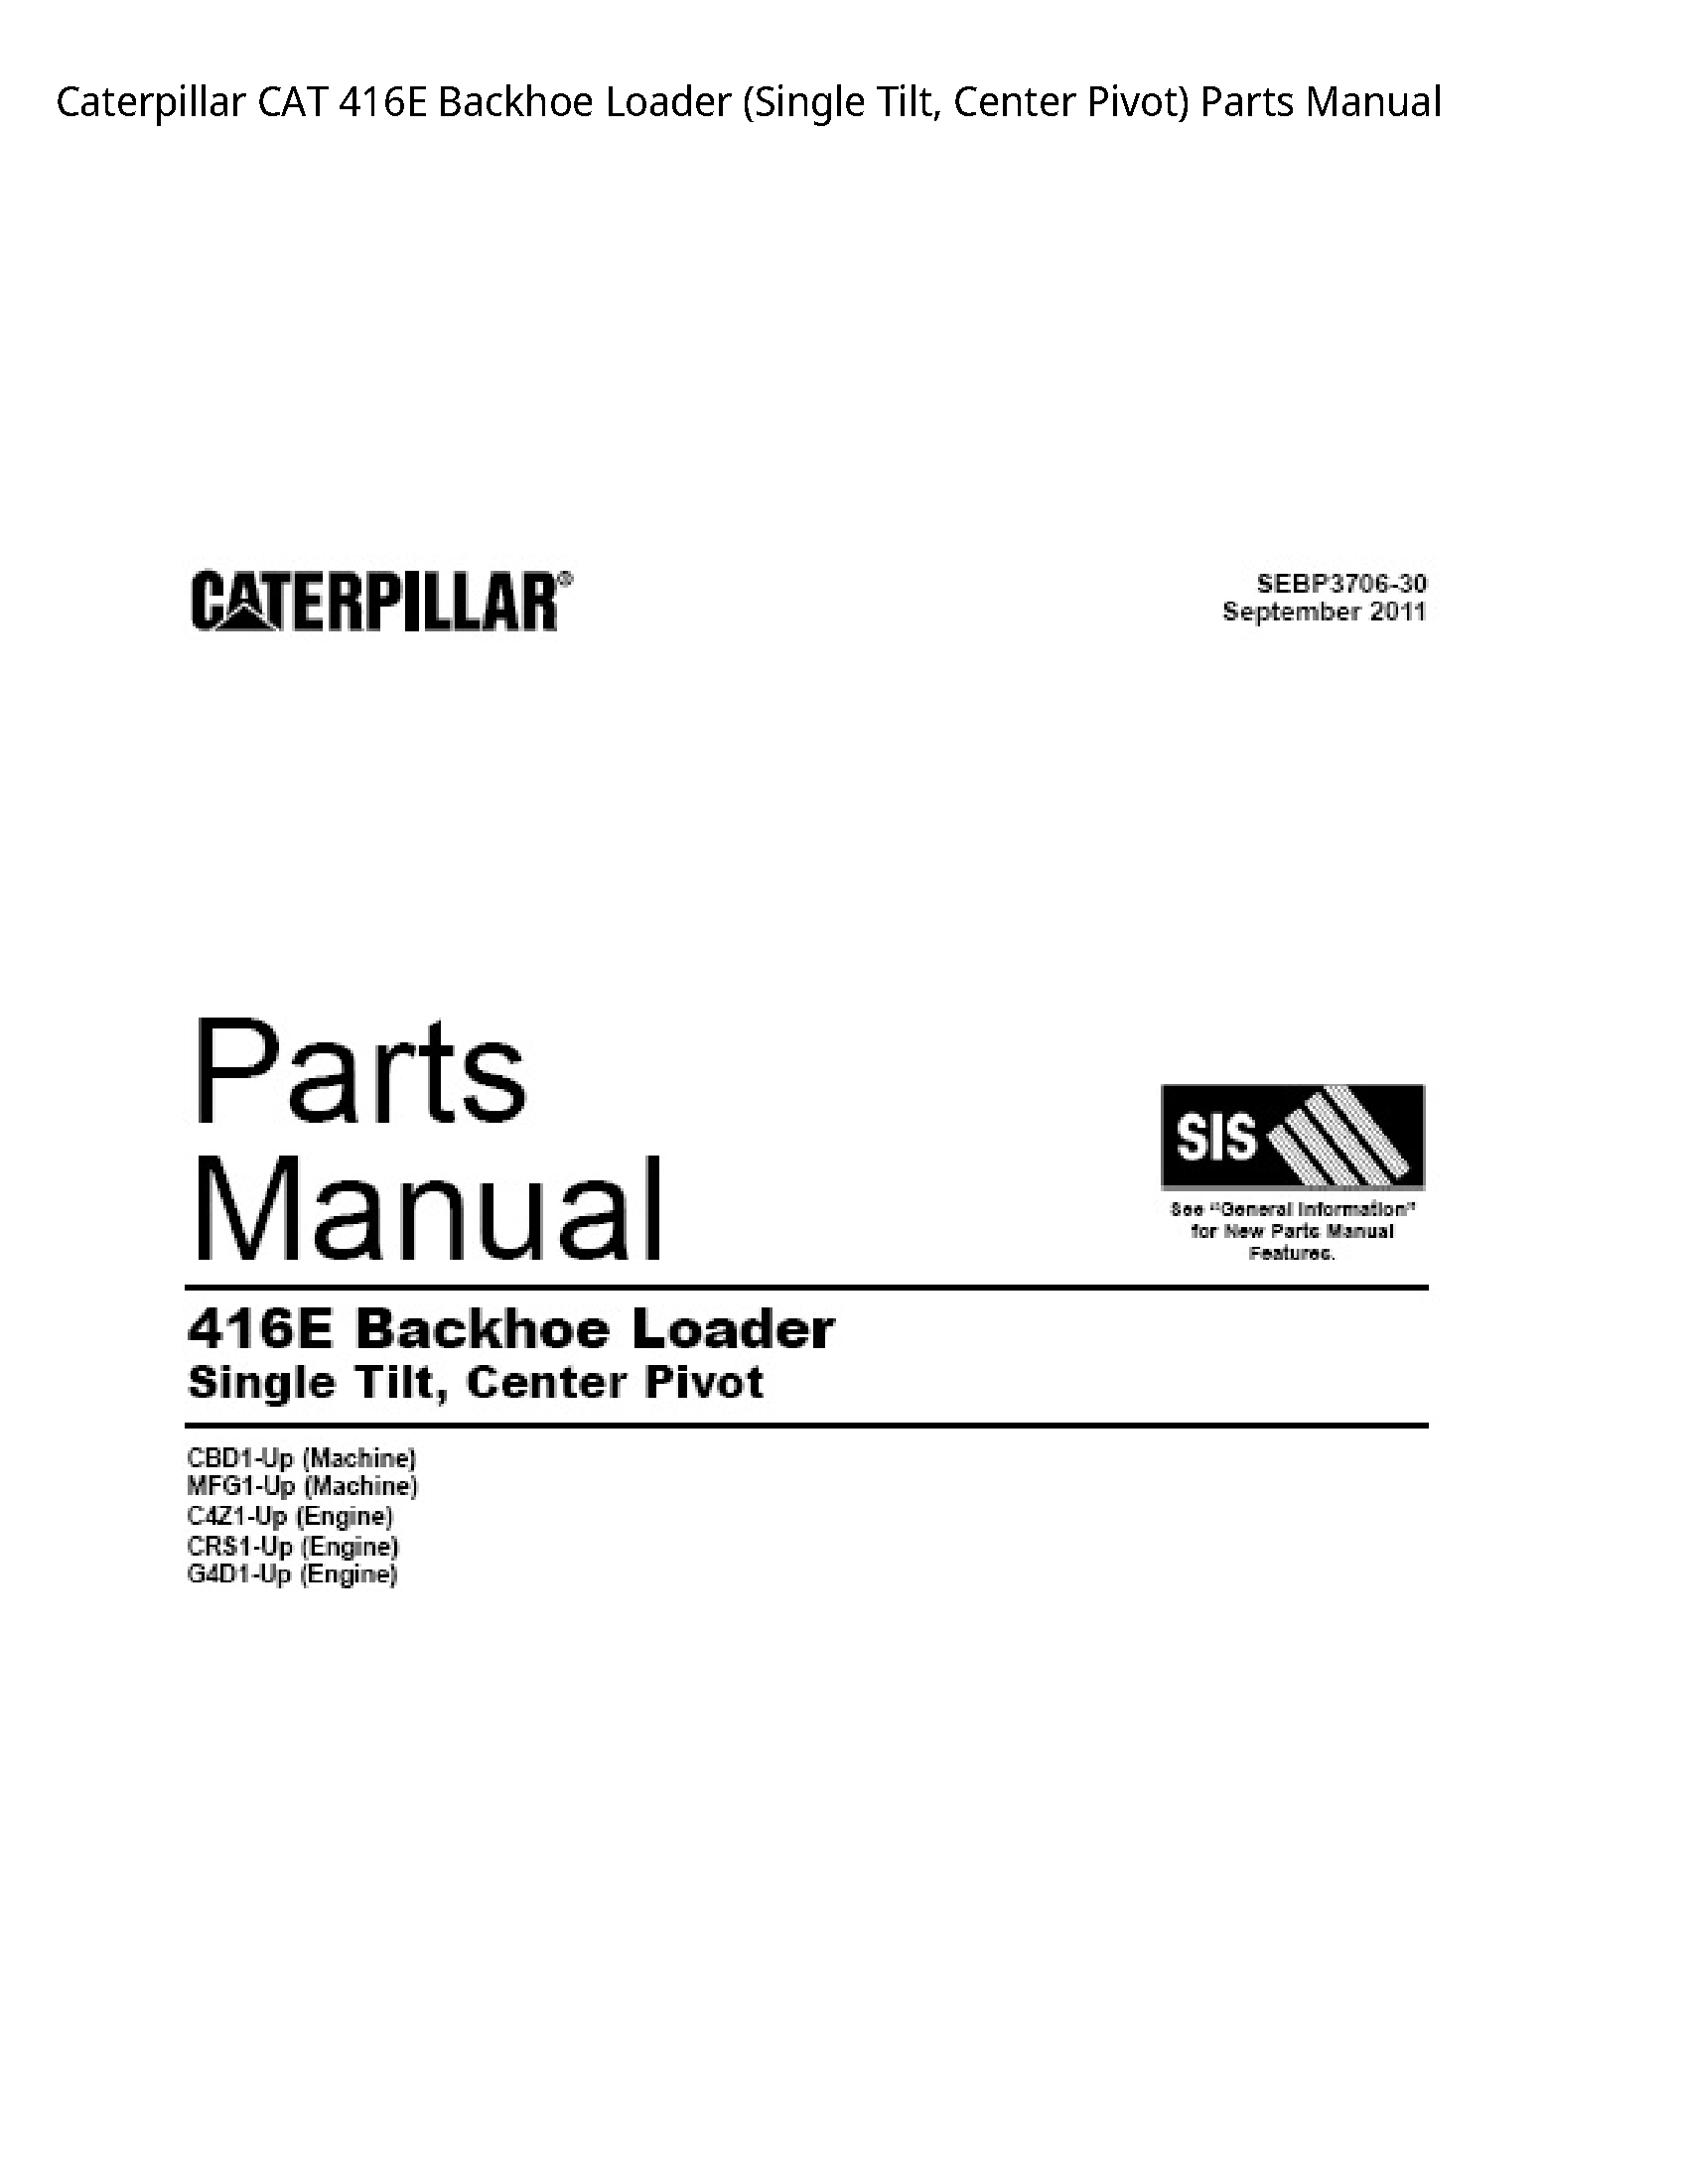 Caterpillar 416E CAT Backhoe Loader (Single Tilt manual